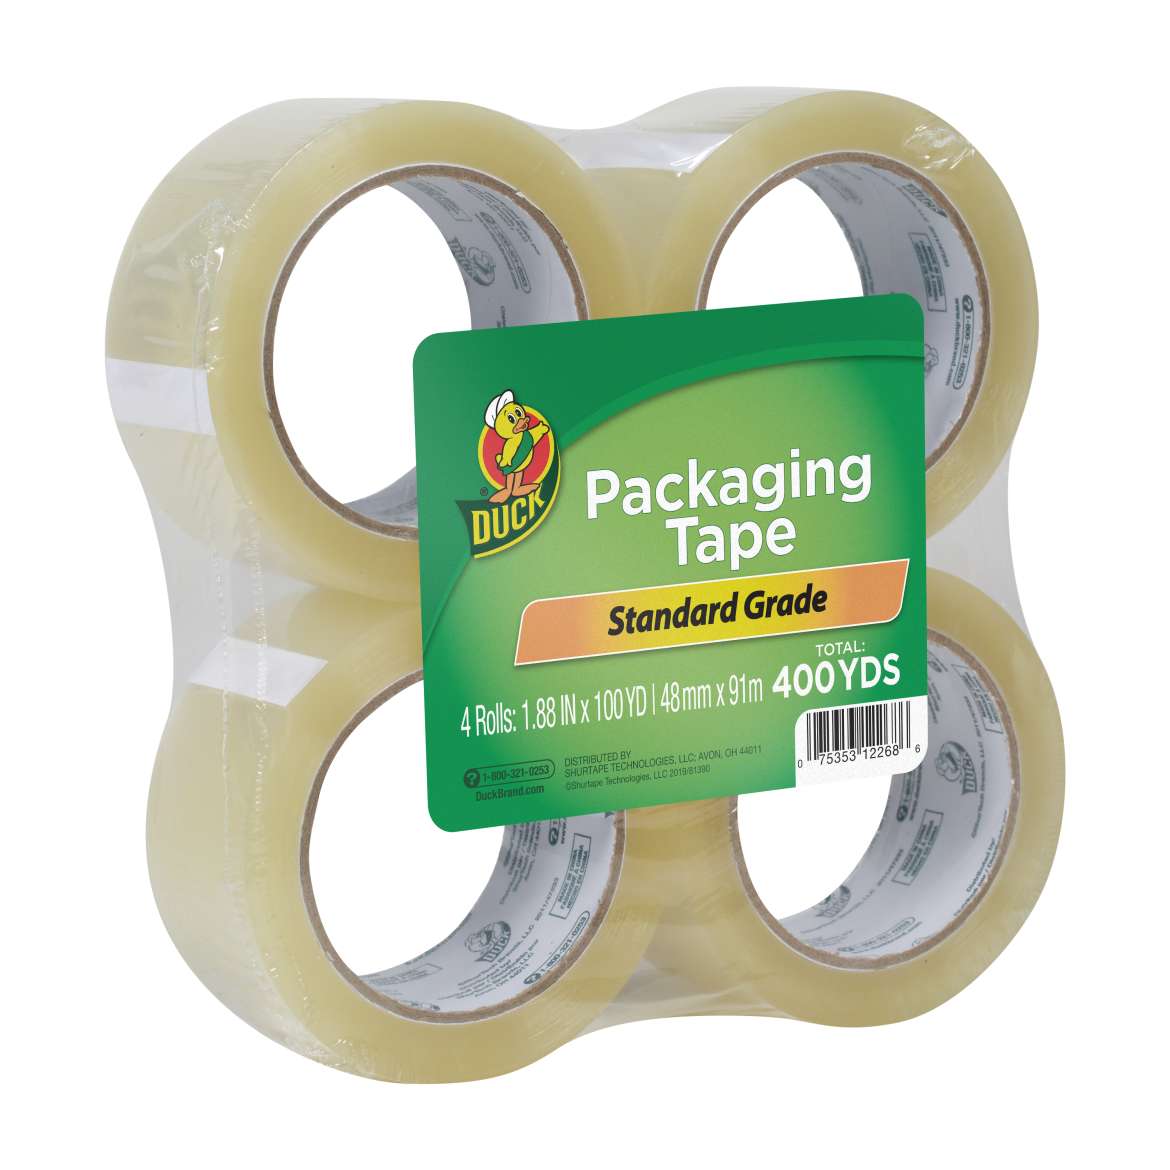 Standard Grade Packing Tape Image